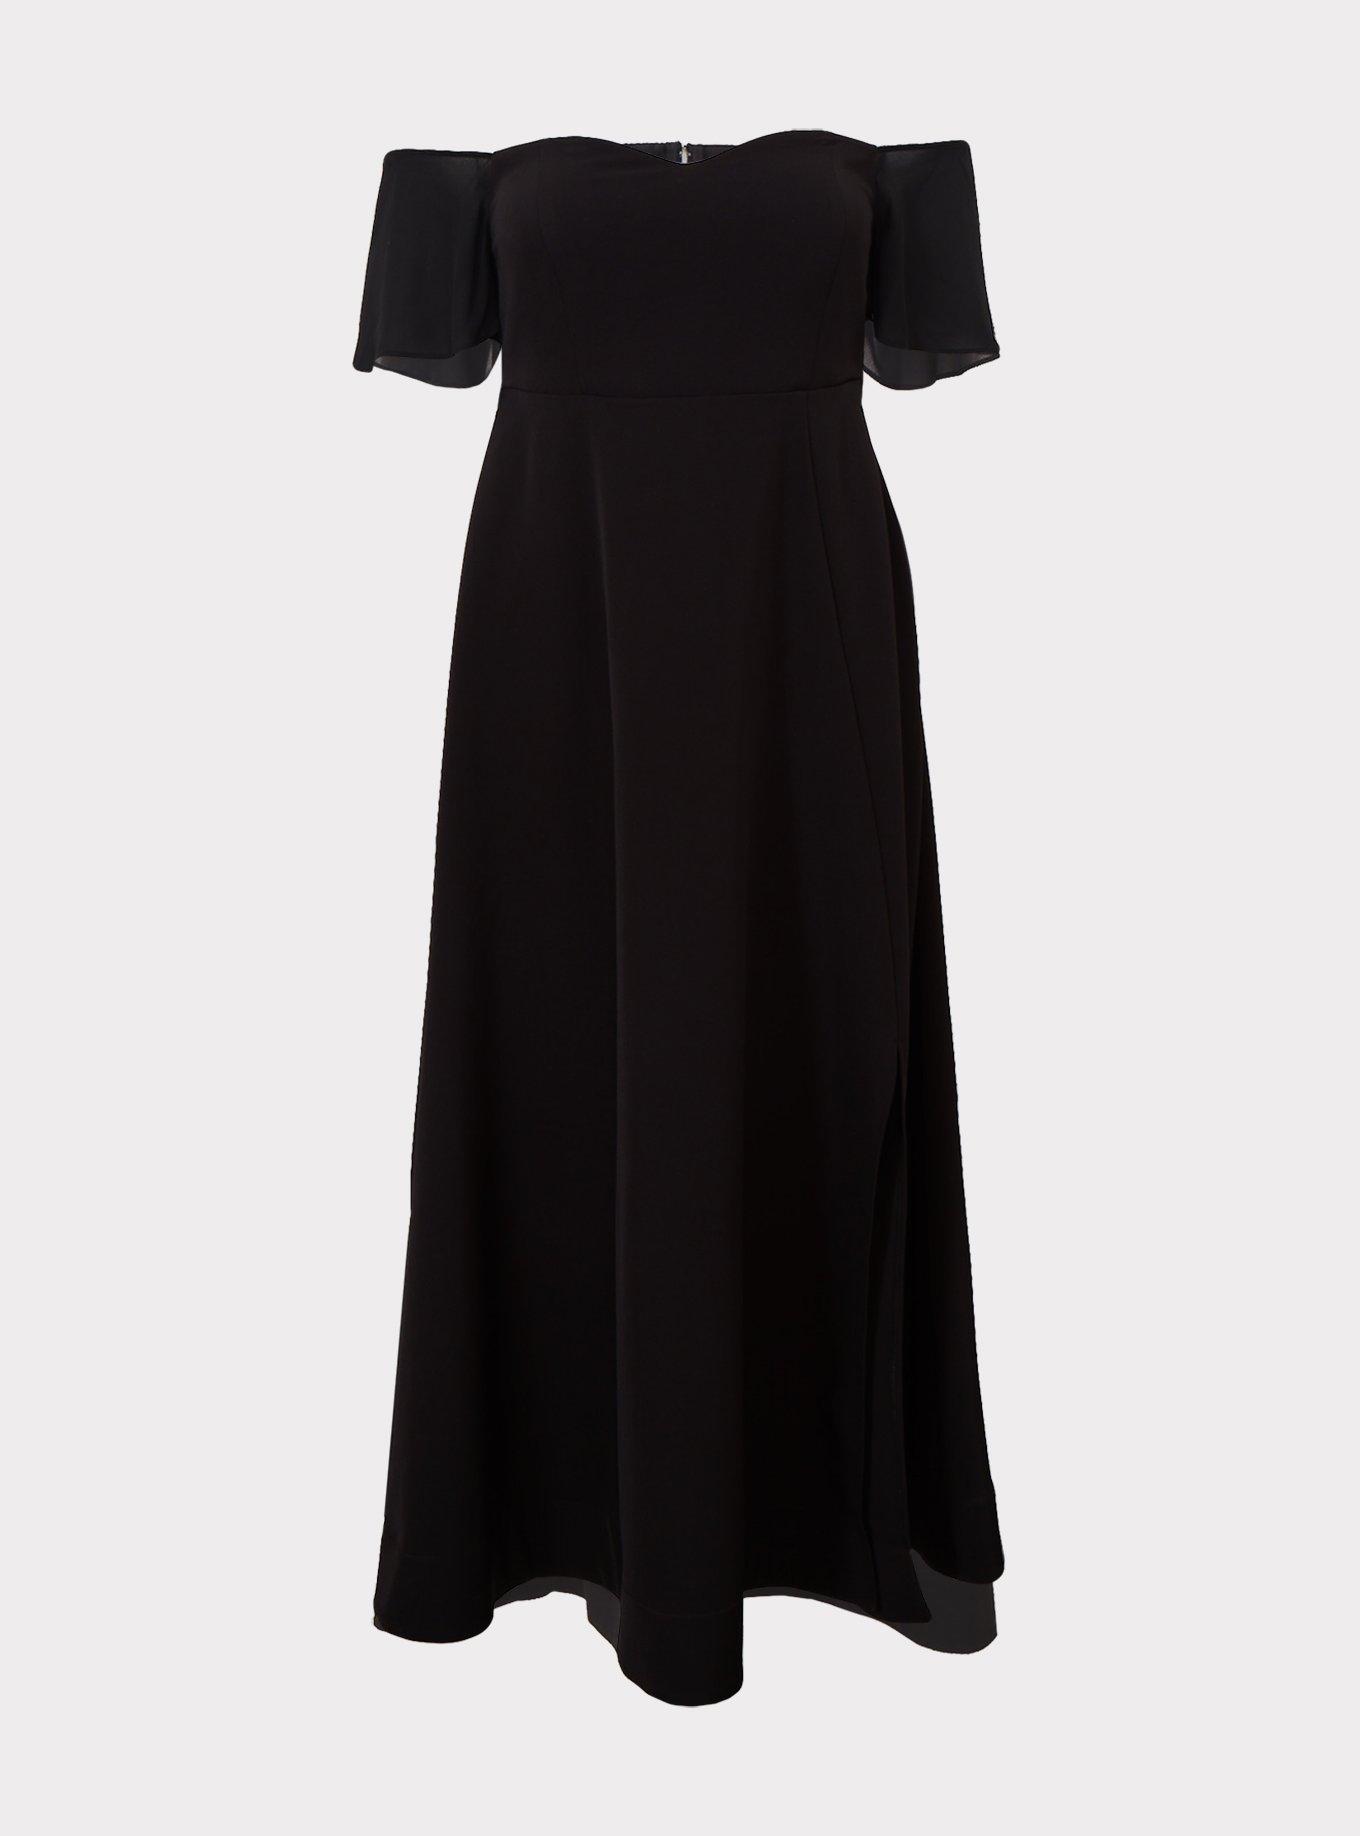 Plus Size - Special Occasion Black Satin Off Shoulder Gown - Torrid